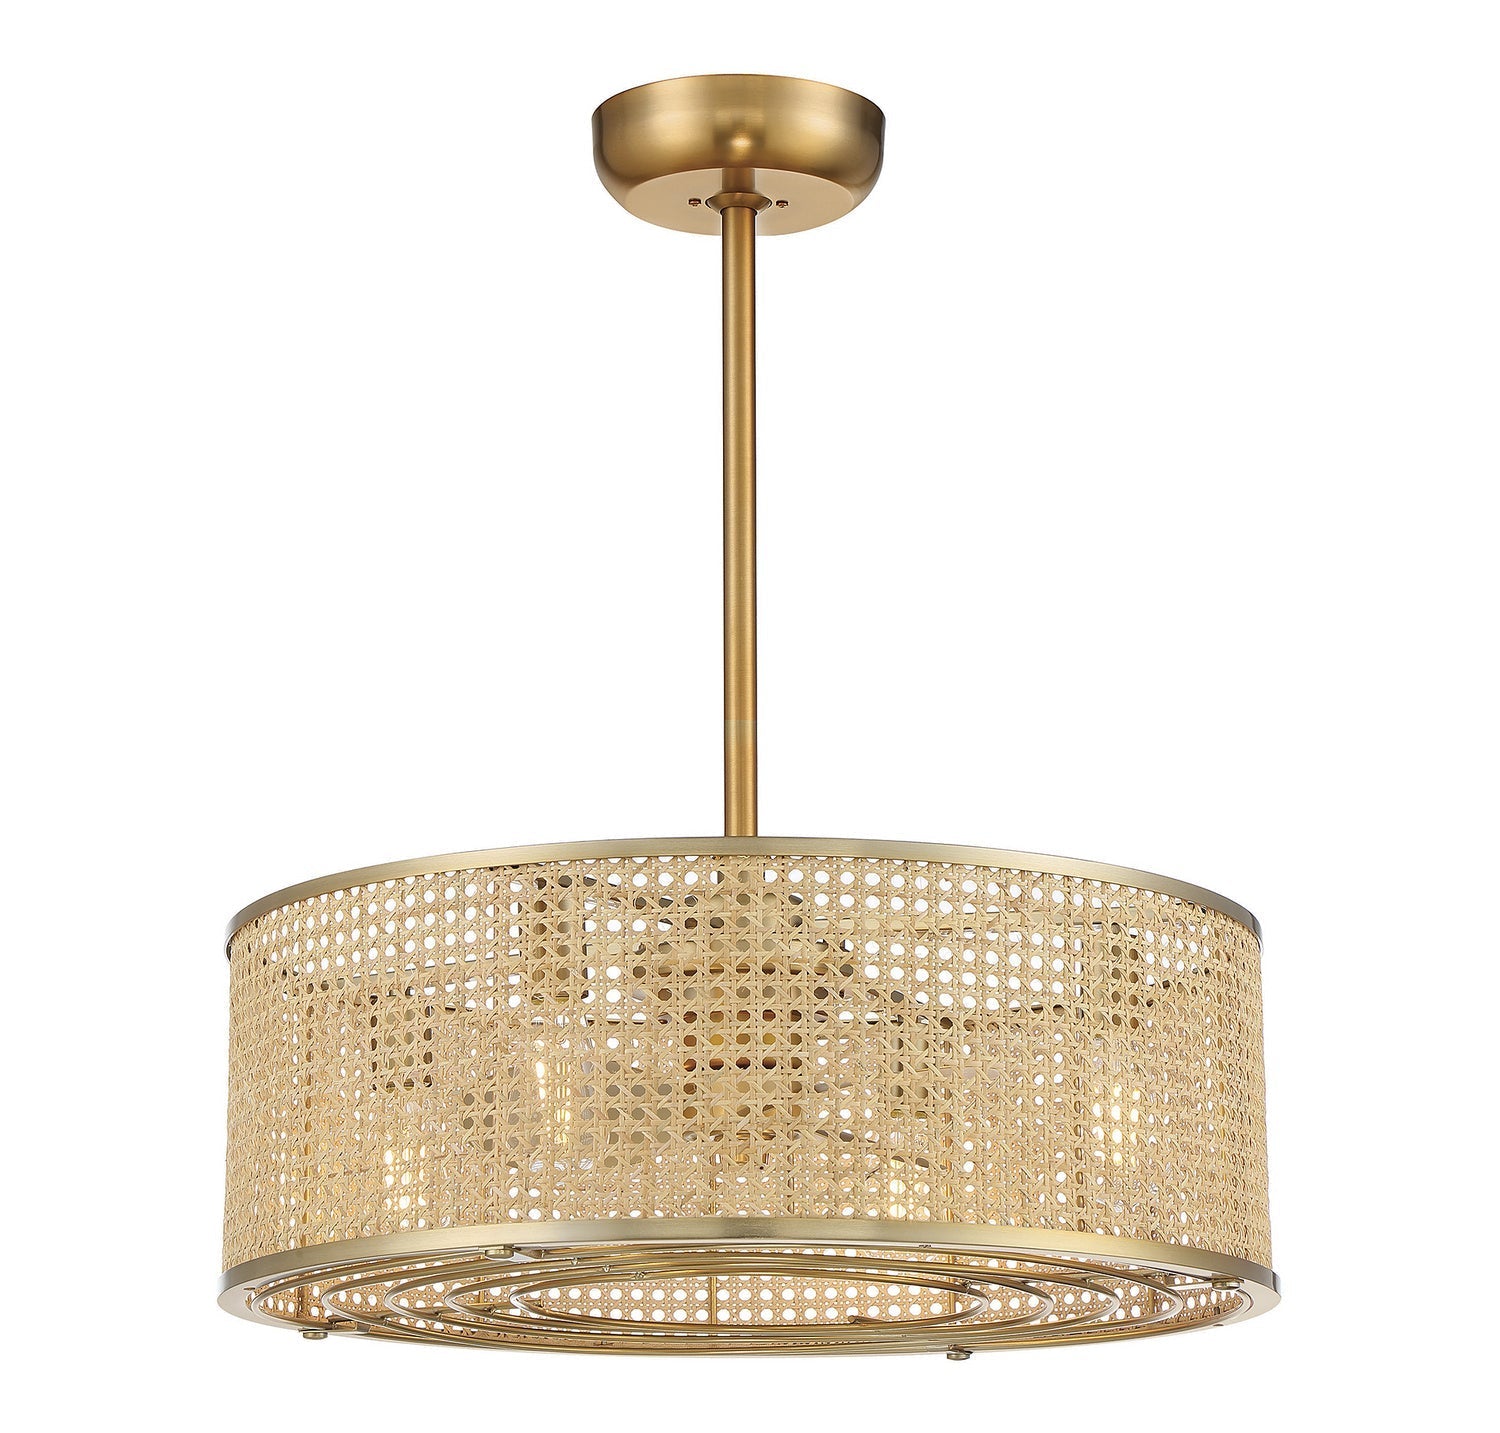 Savoy House Astoria 25-FD-1650-322 Ceiling Fan 14 - Warm Brass, Gold/